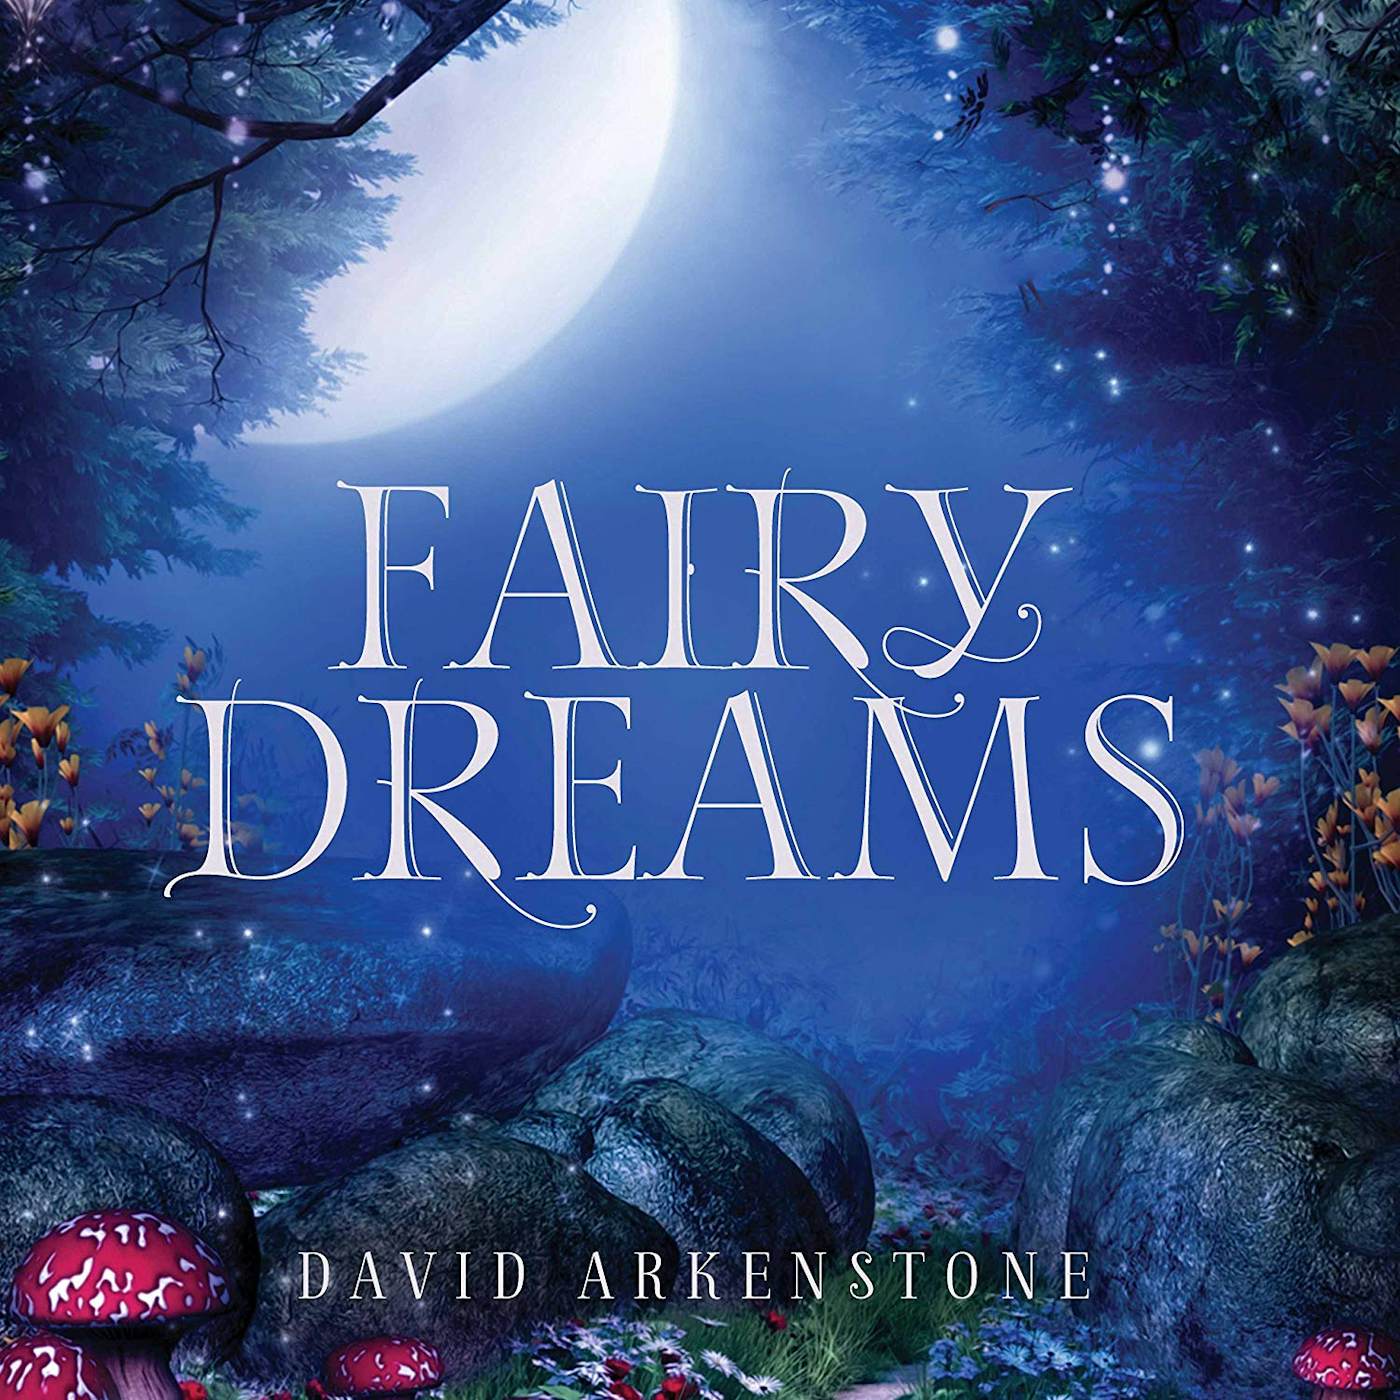 David Arkenstone FAIRY DREAMS CD